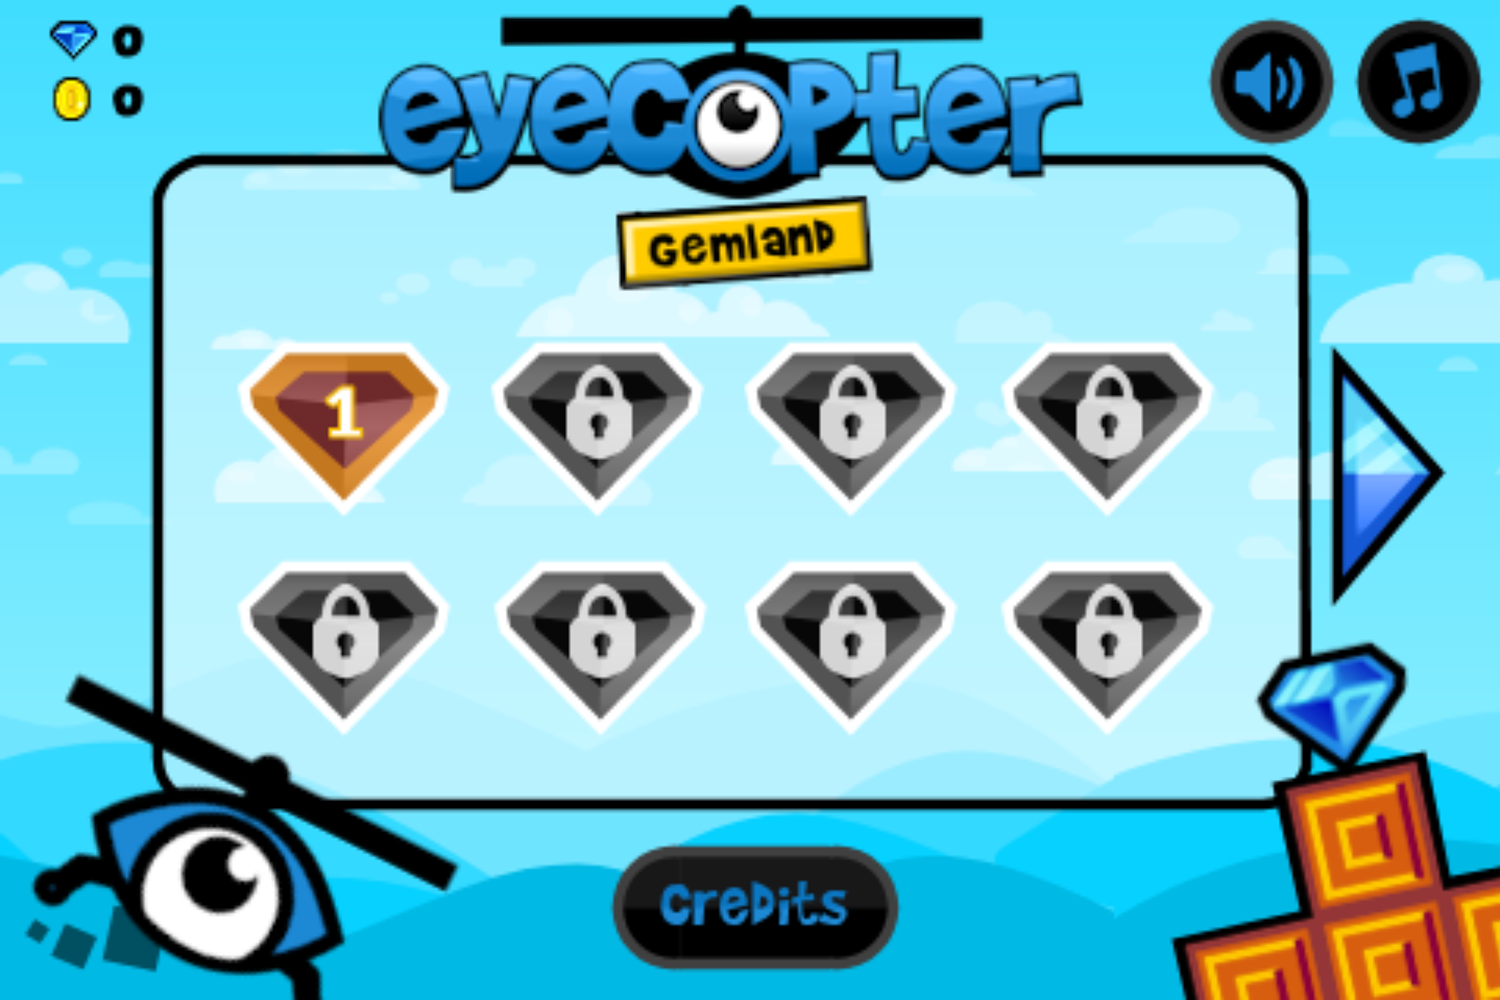 Eyecopter Gemland Game Level Select Screenshot.